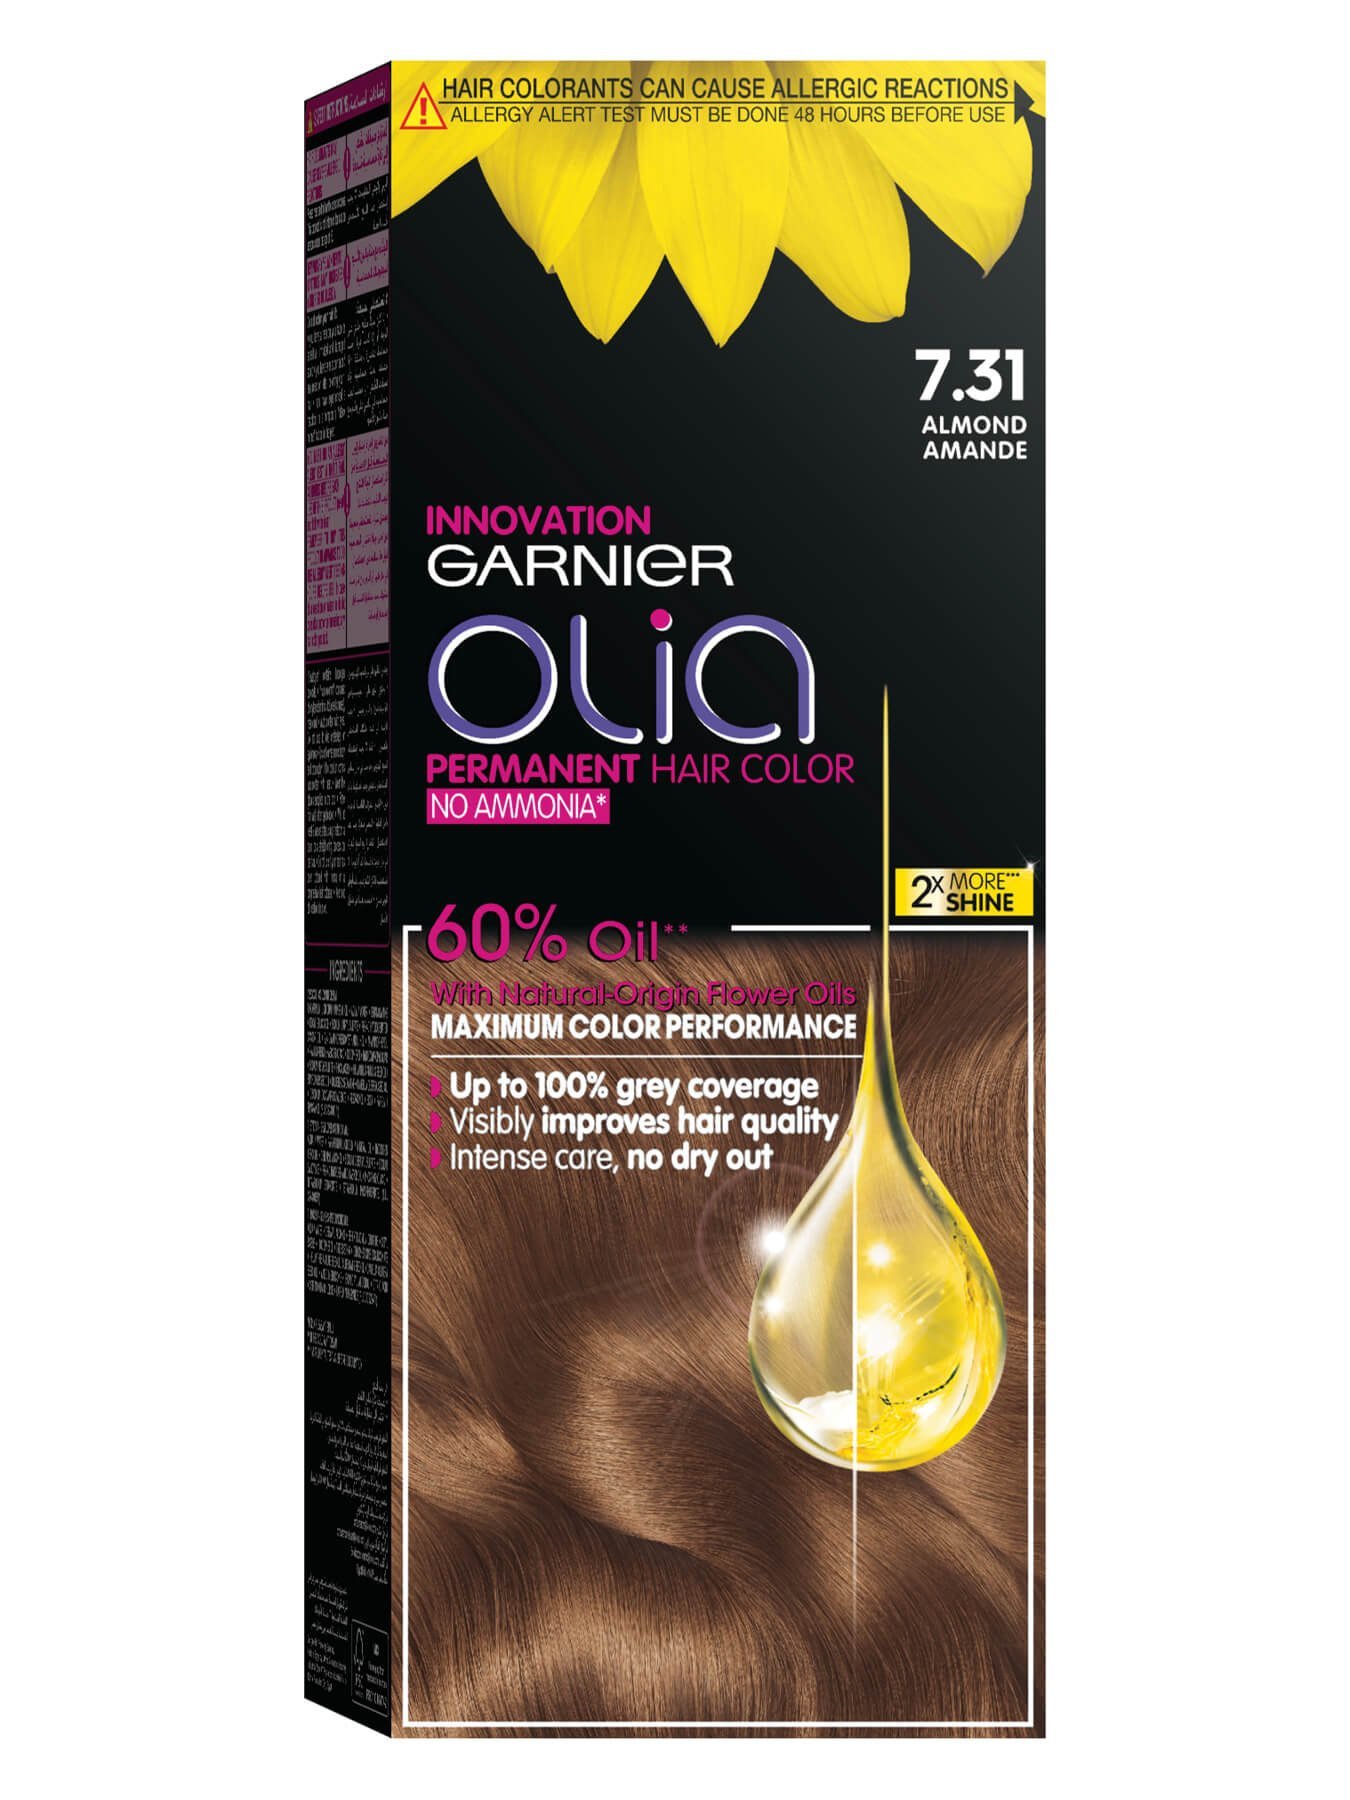 Garnier Olia,  Almond, No Ammonia Permanent Haircolor, with 60% Oils